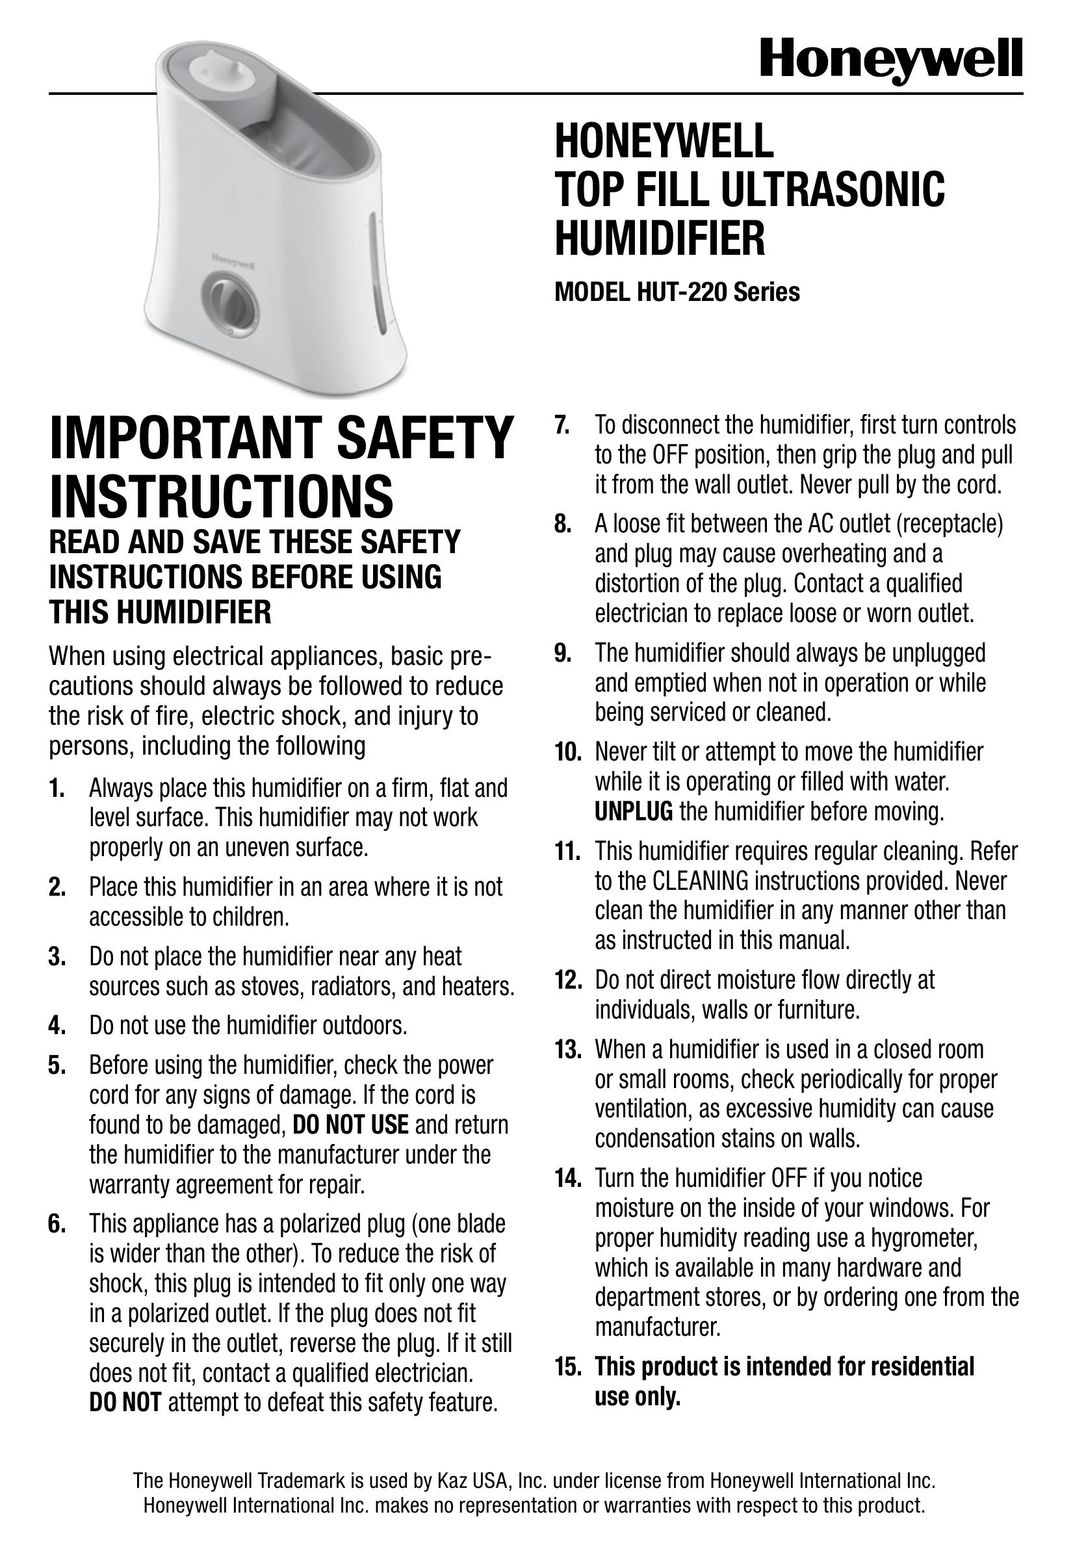 Honeywell HDC-200PDQ Humidifier User Manual